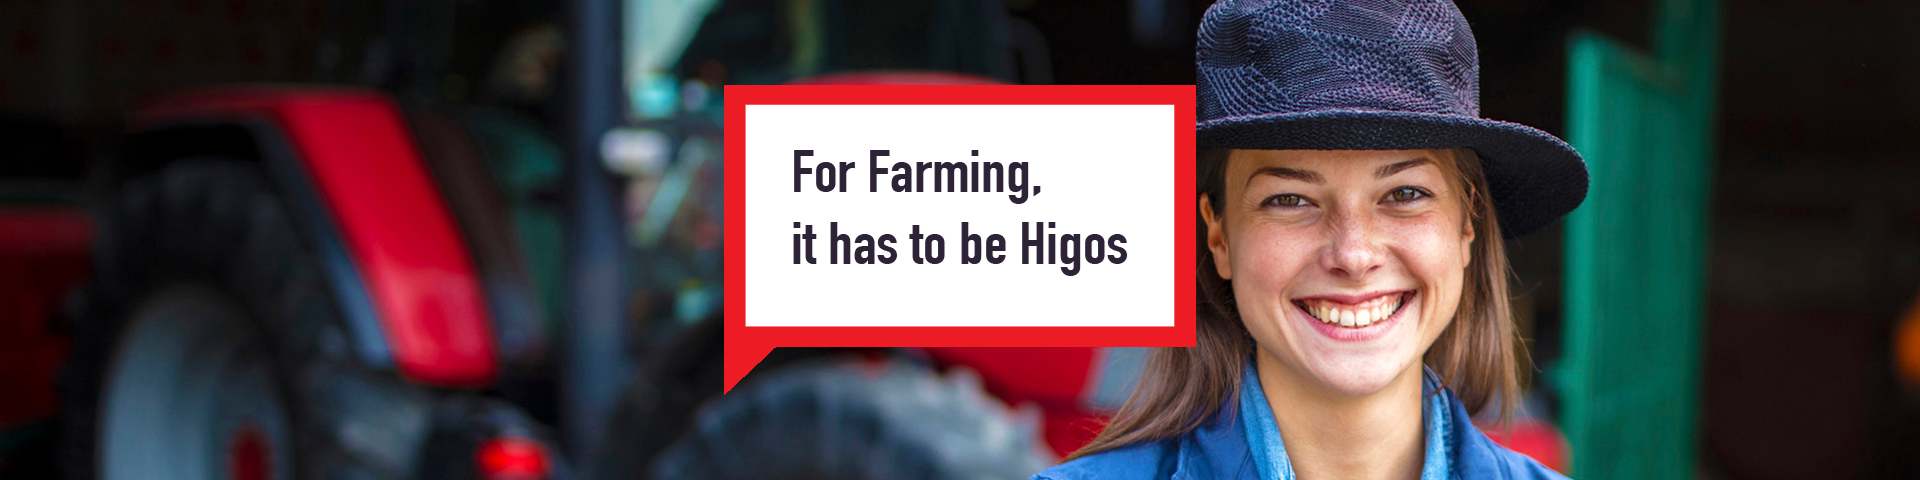 Higos business insurance farming 